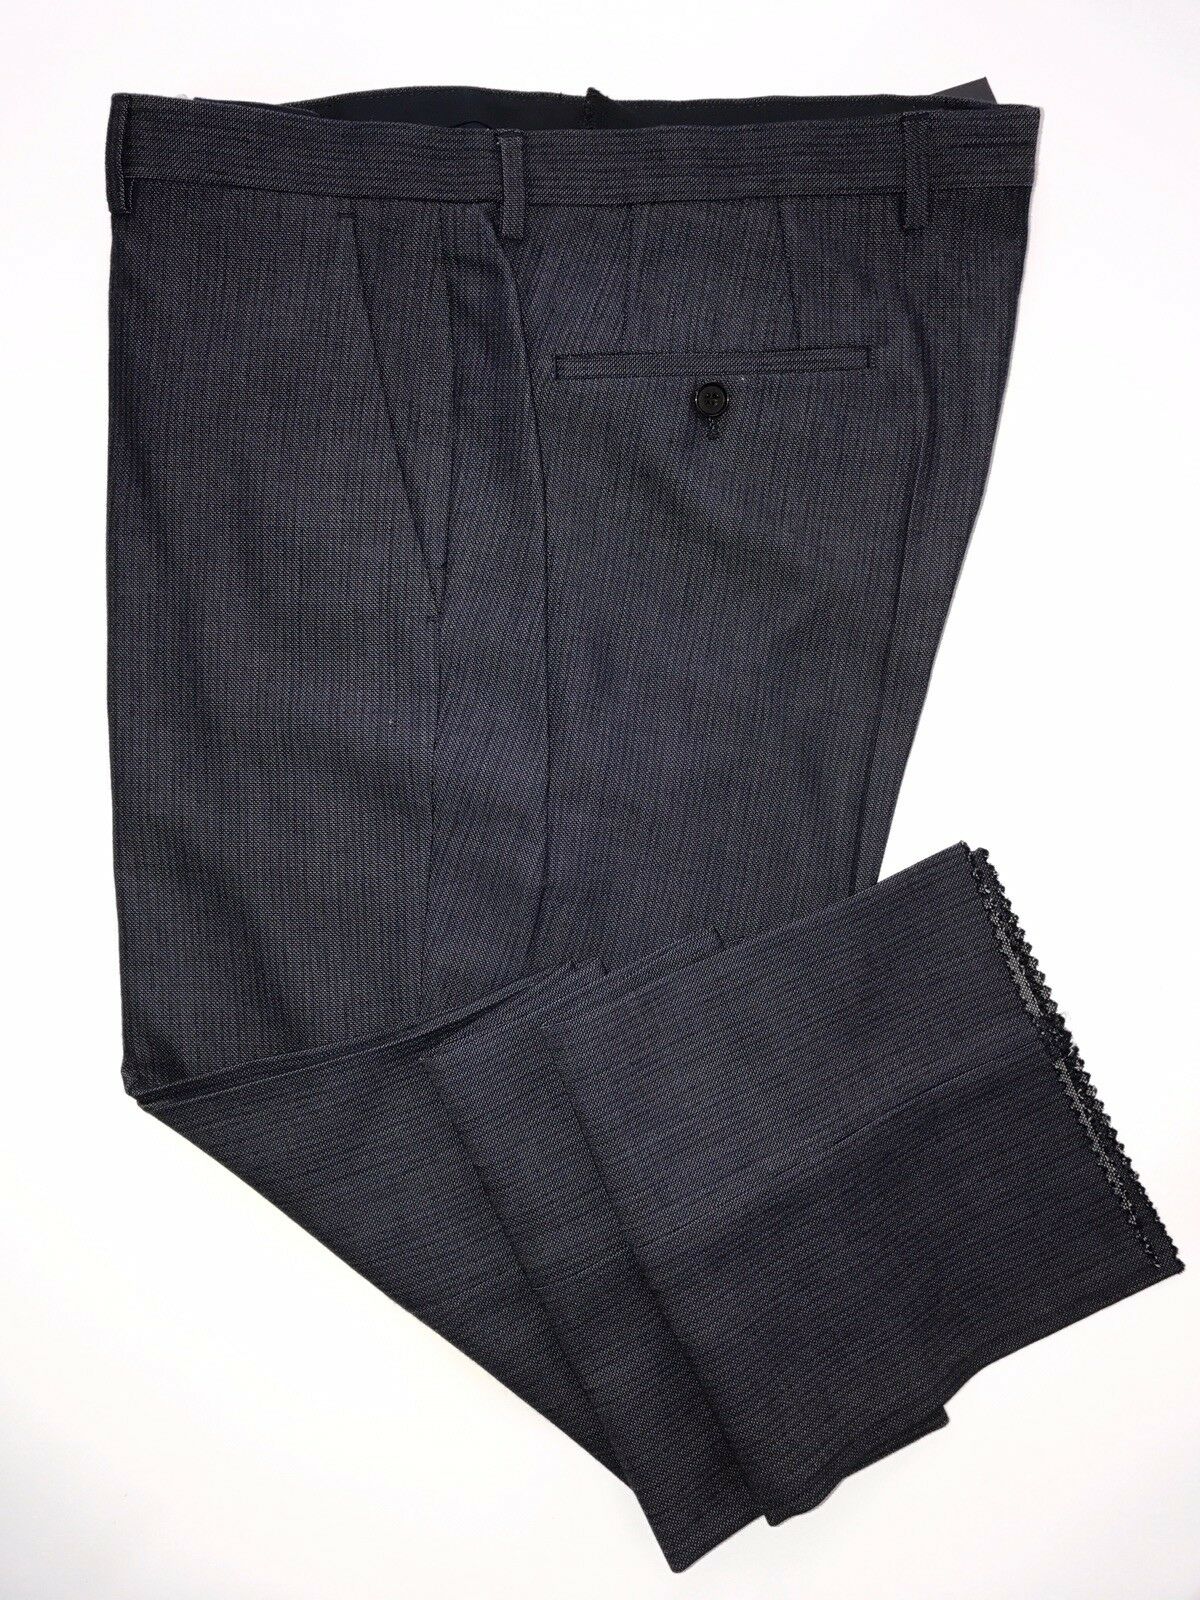 NWT $255 Boss Hugo Boss Central Mens Cotton Navy Dress Pants Size 30R US